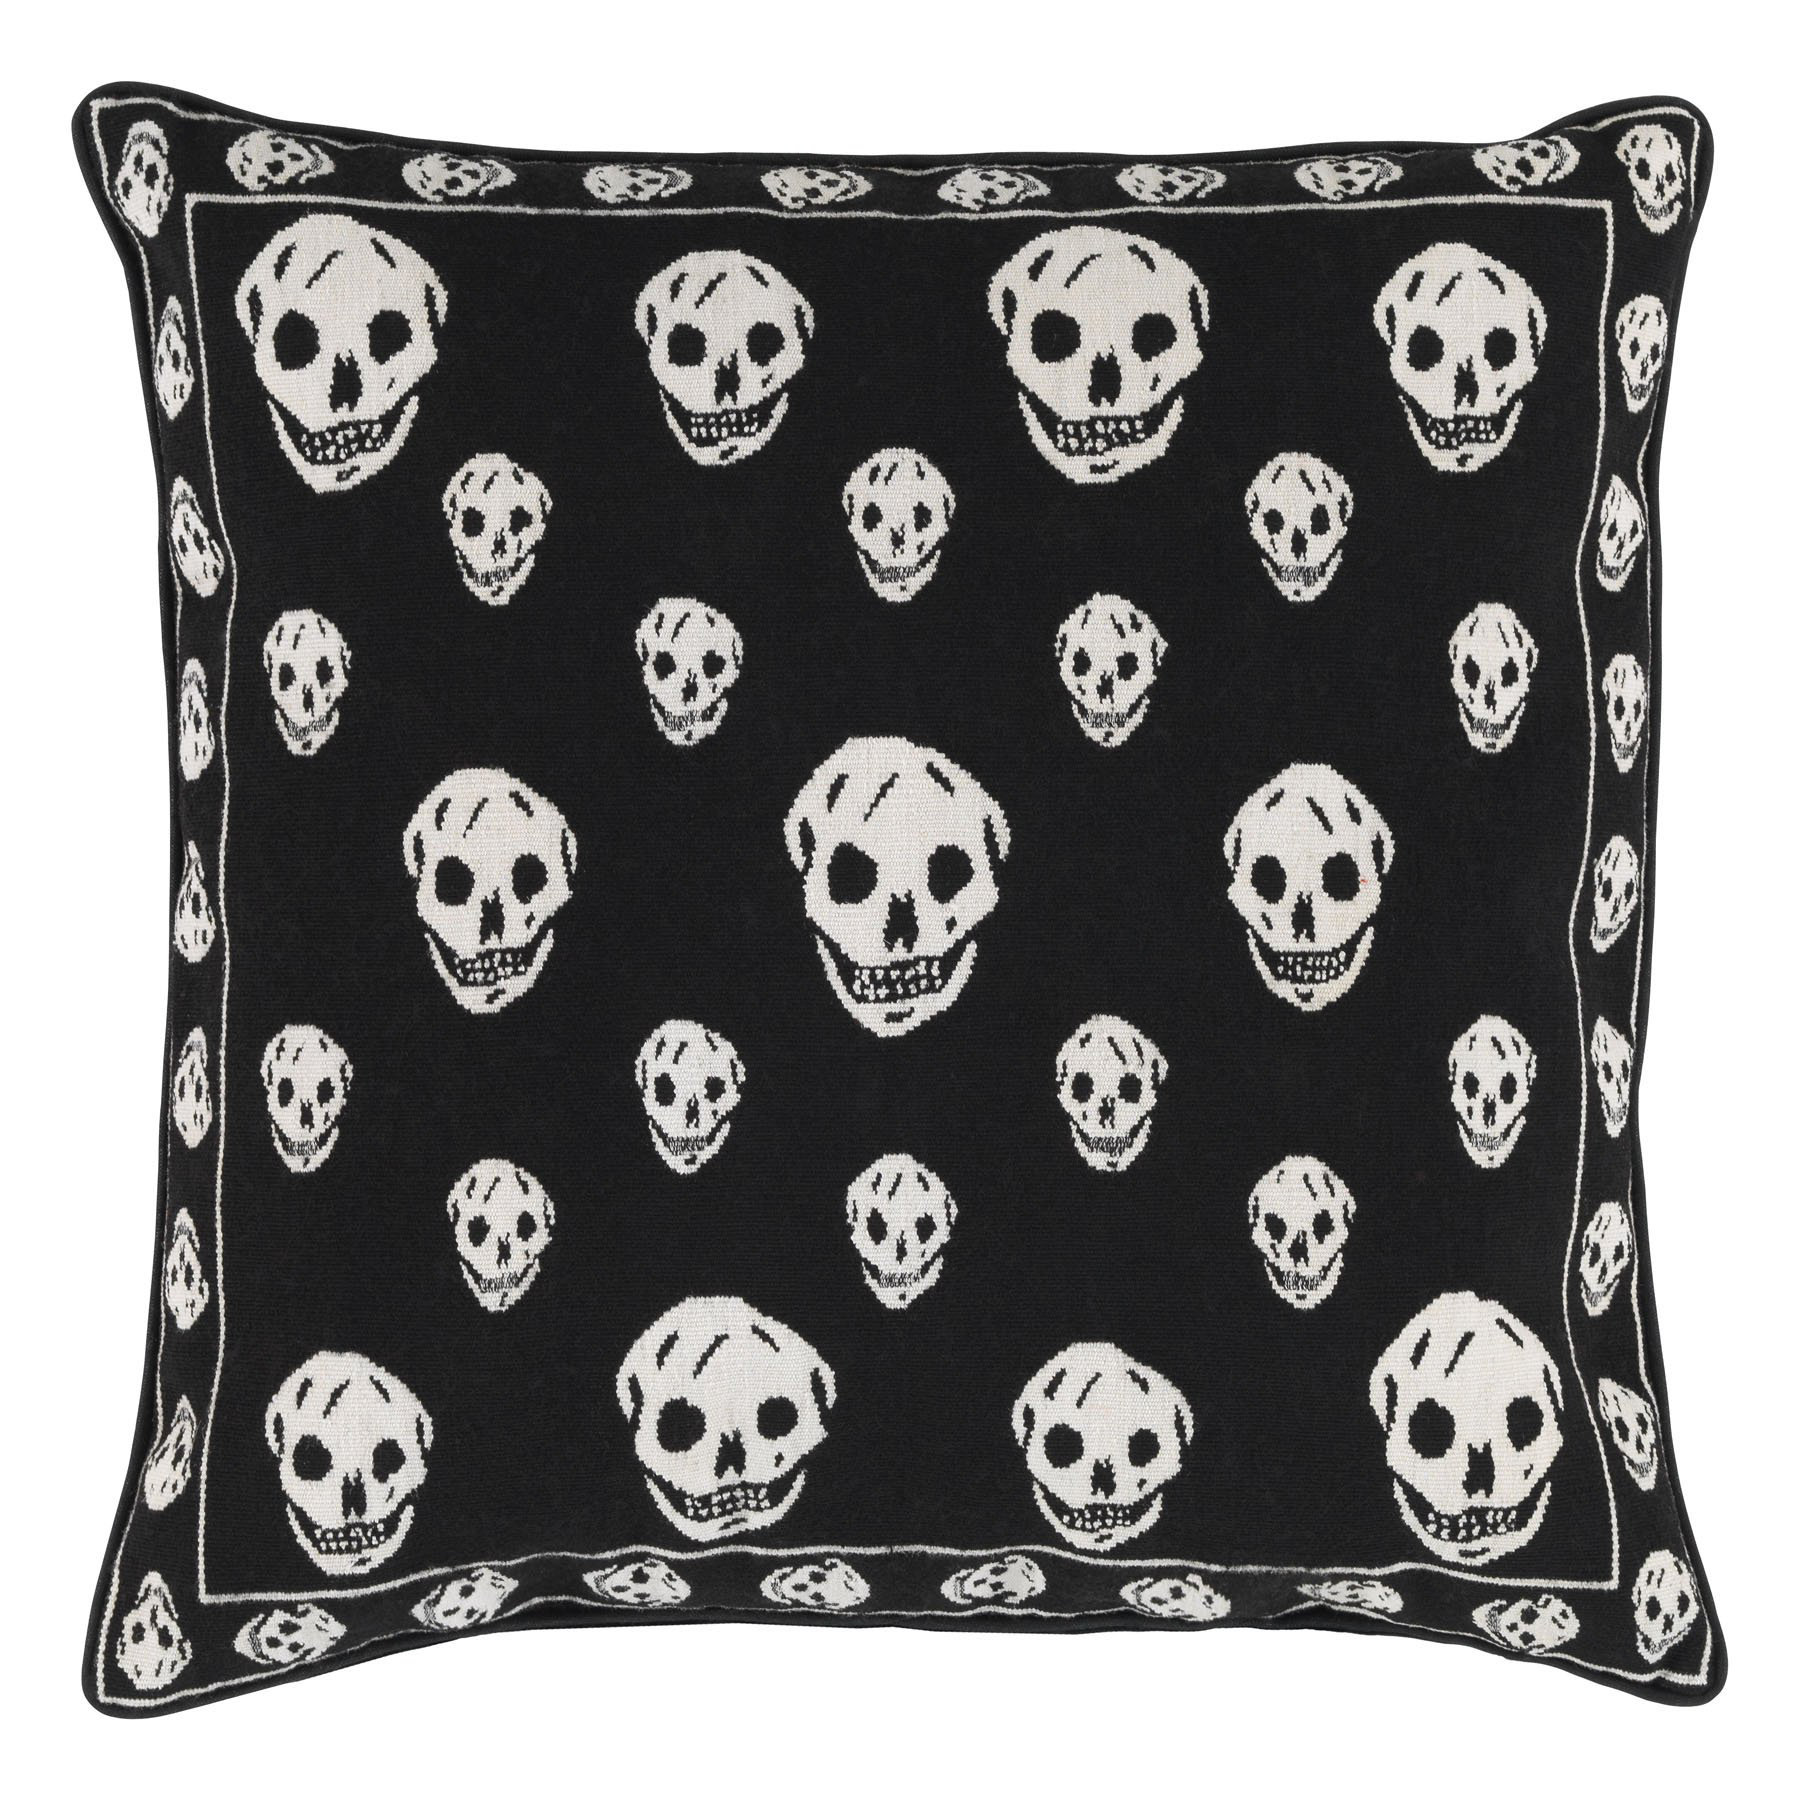 The Rug Company Alexander Mcqueen Skull Pillow Cover & Insert